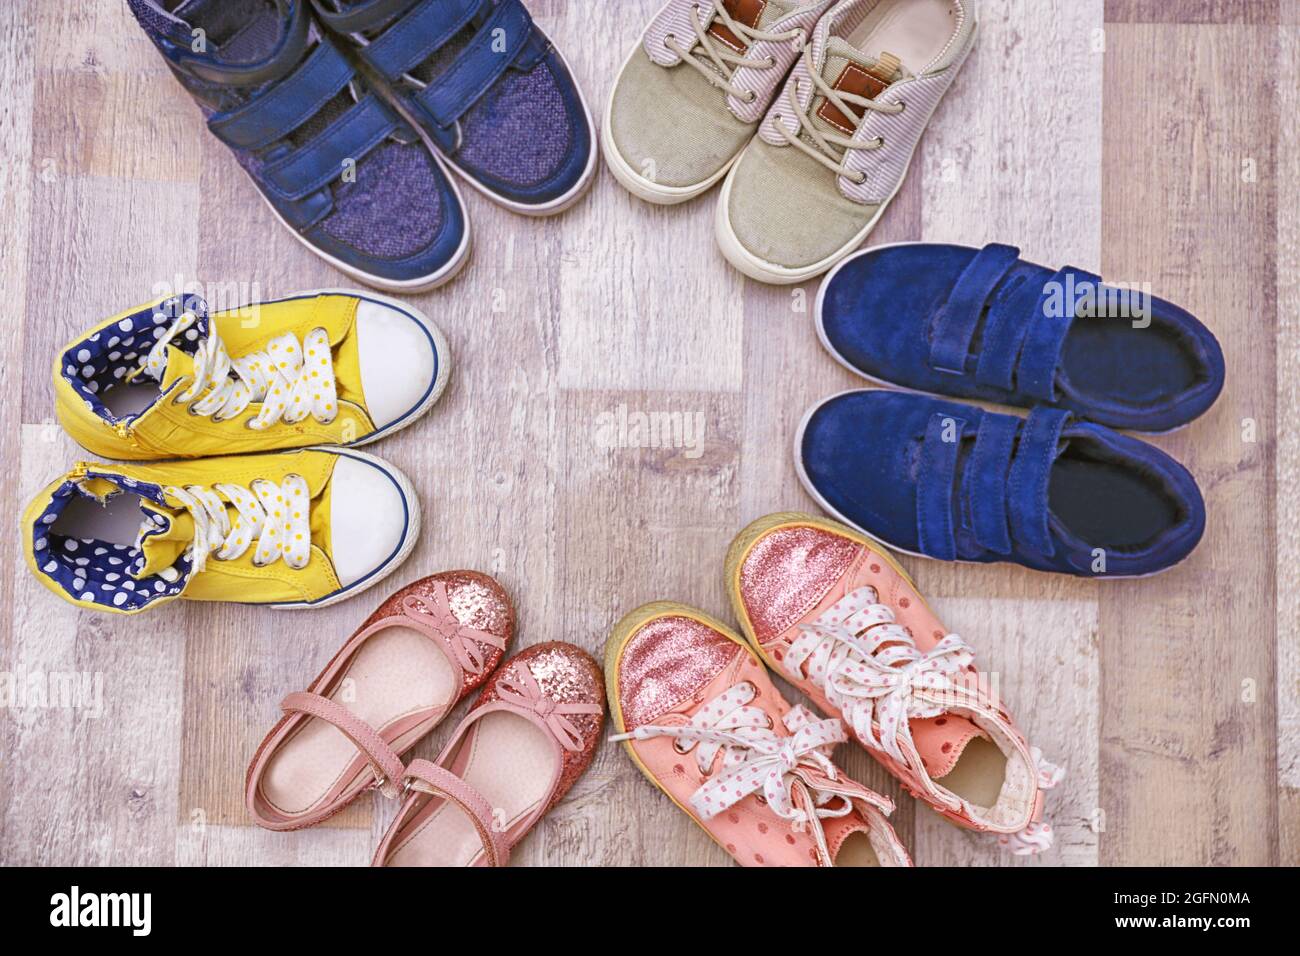 Bunte Kinder Schuhe auf dem Boden Stockfotografie - Alamy